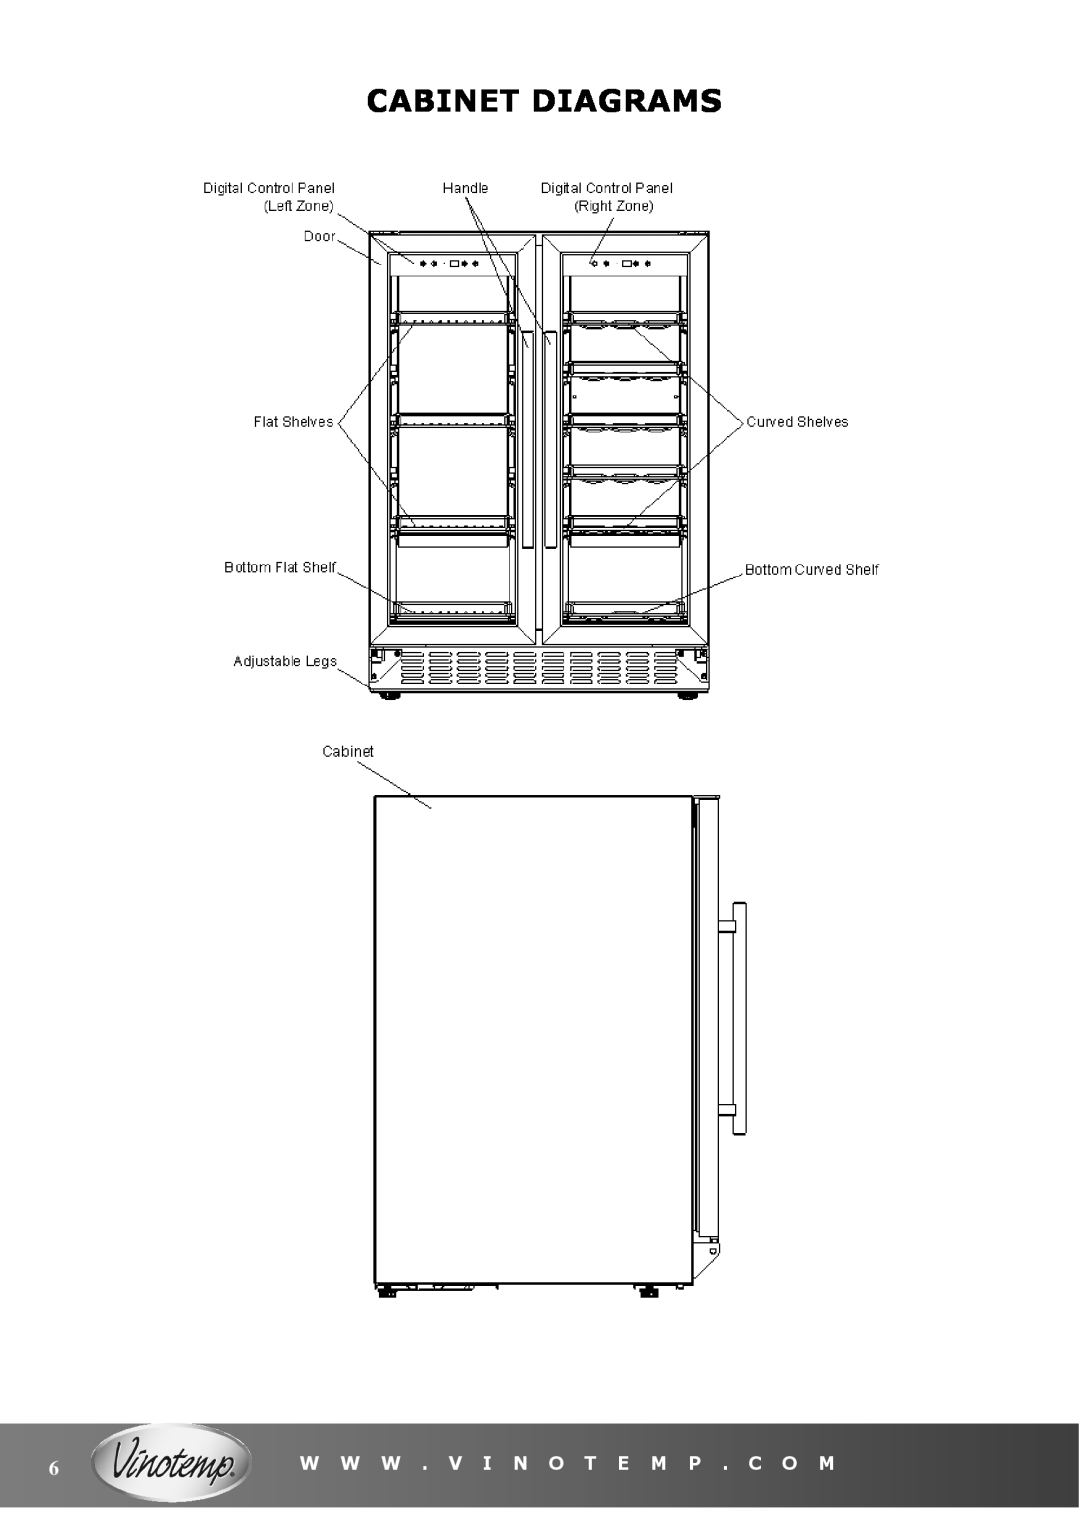 Vinotemp VT-36 owner manual Cabinet Diagrams, W W W . V I N O T E M P . C O M 